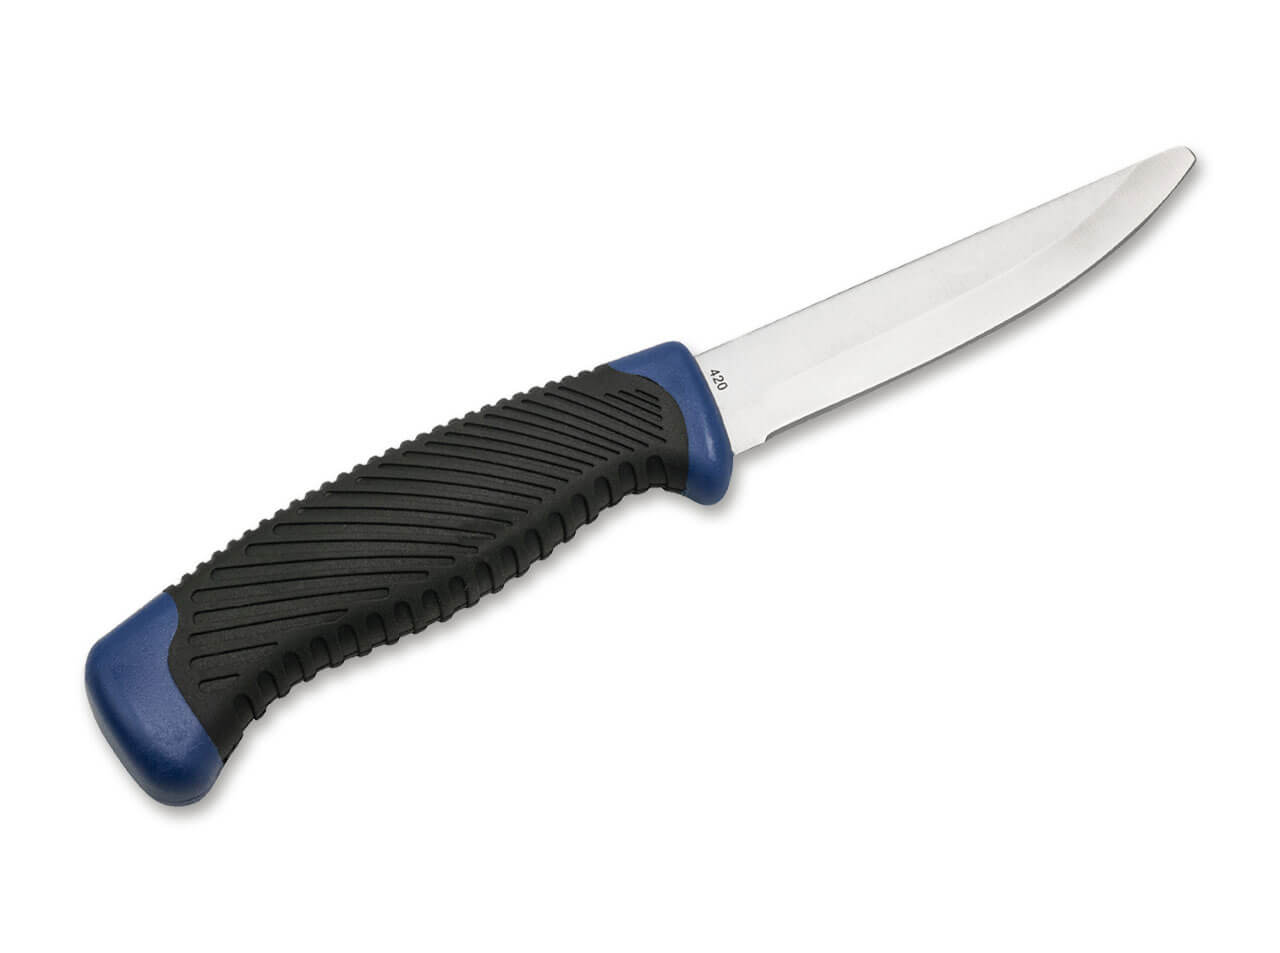 Boker Magnum Kid's II Fixed Knife 3.13 440C Steel Full Tang Blade